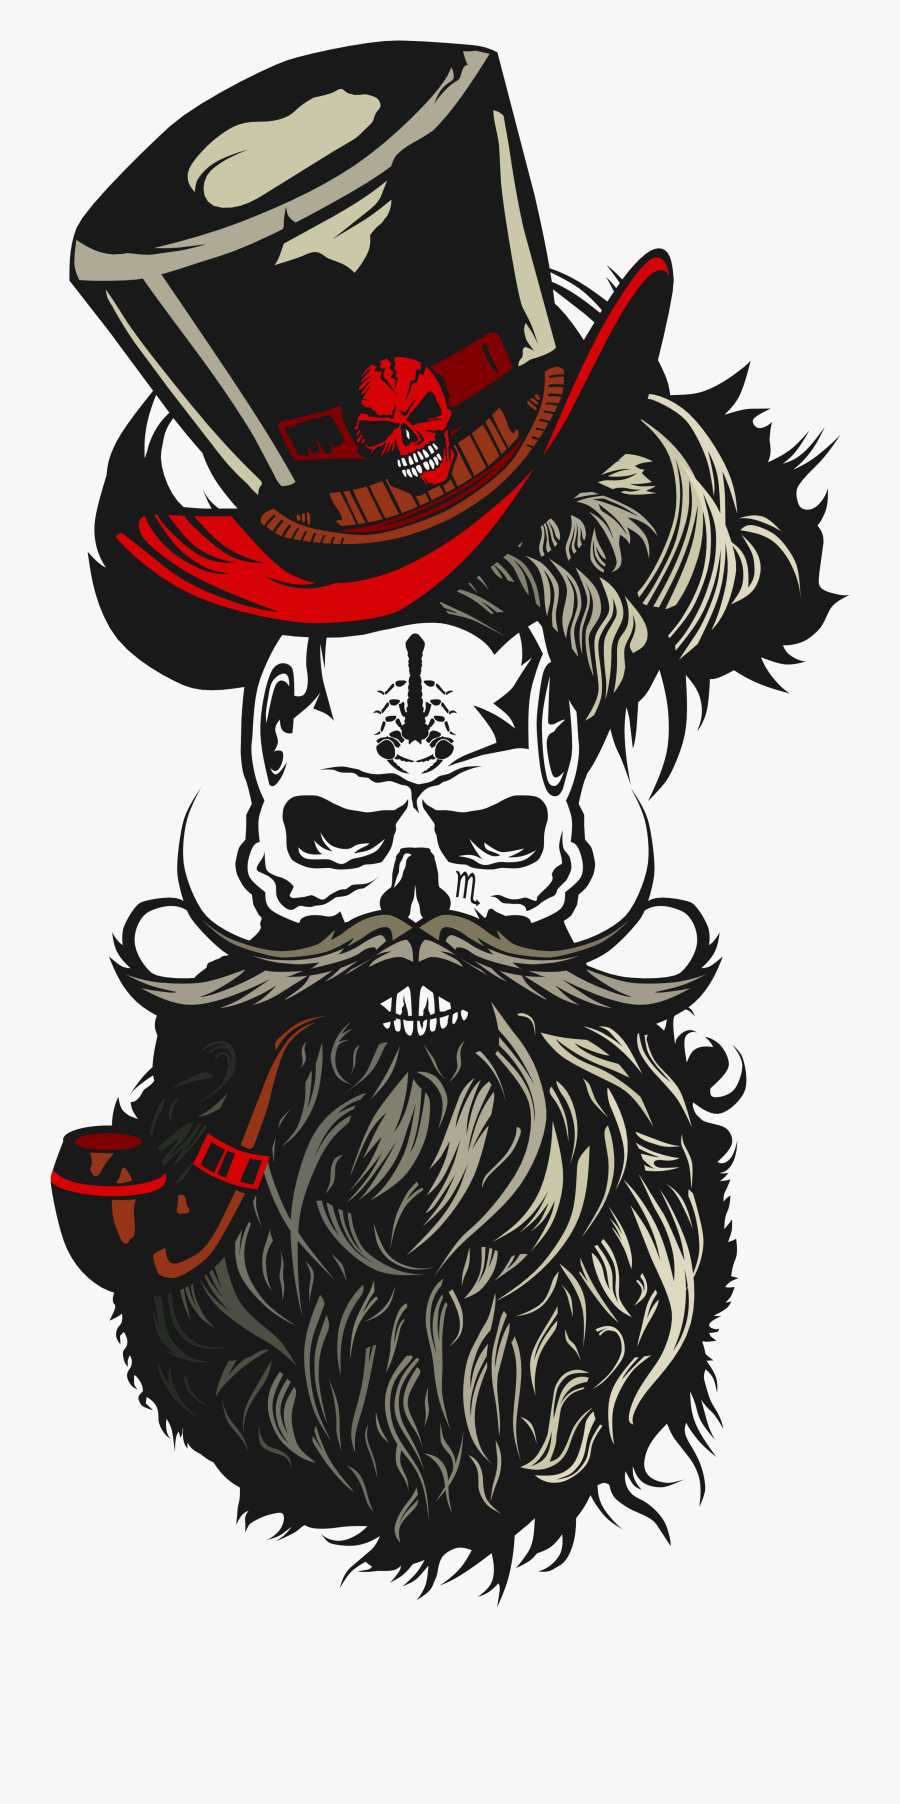 Transparent Indian Headdress Png - Pirate Skull Beard Hd, Transparent Clipart